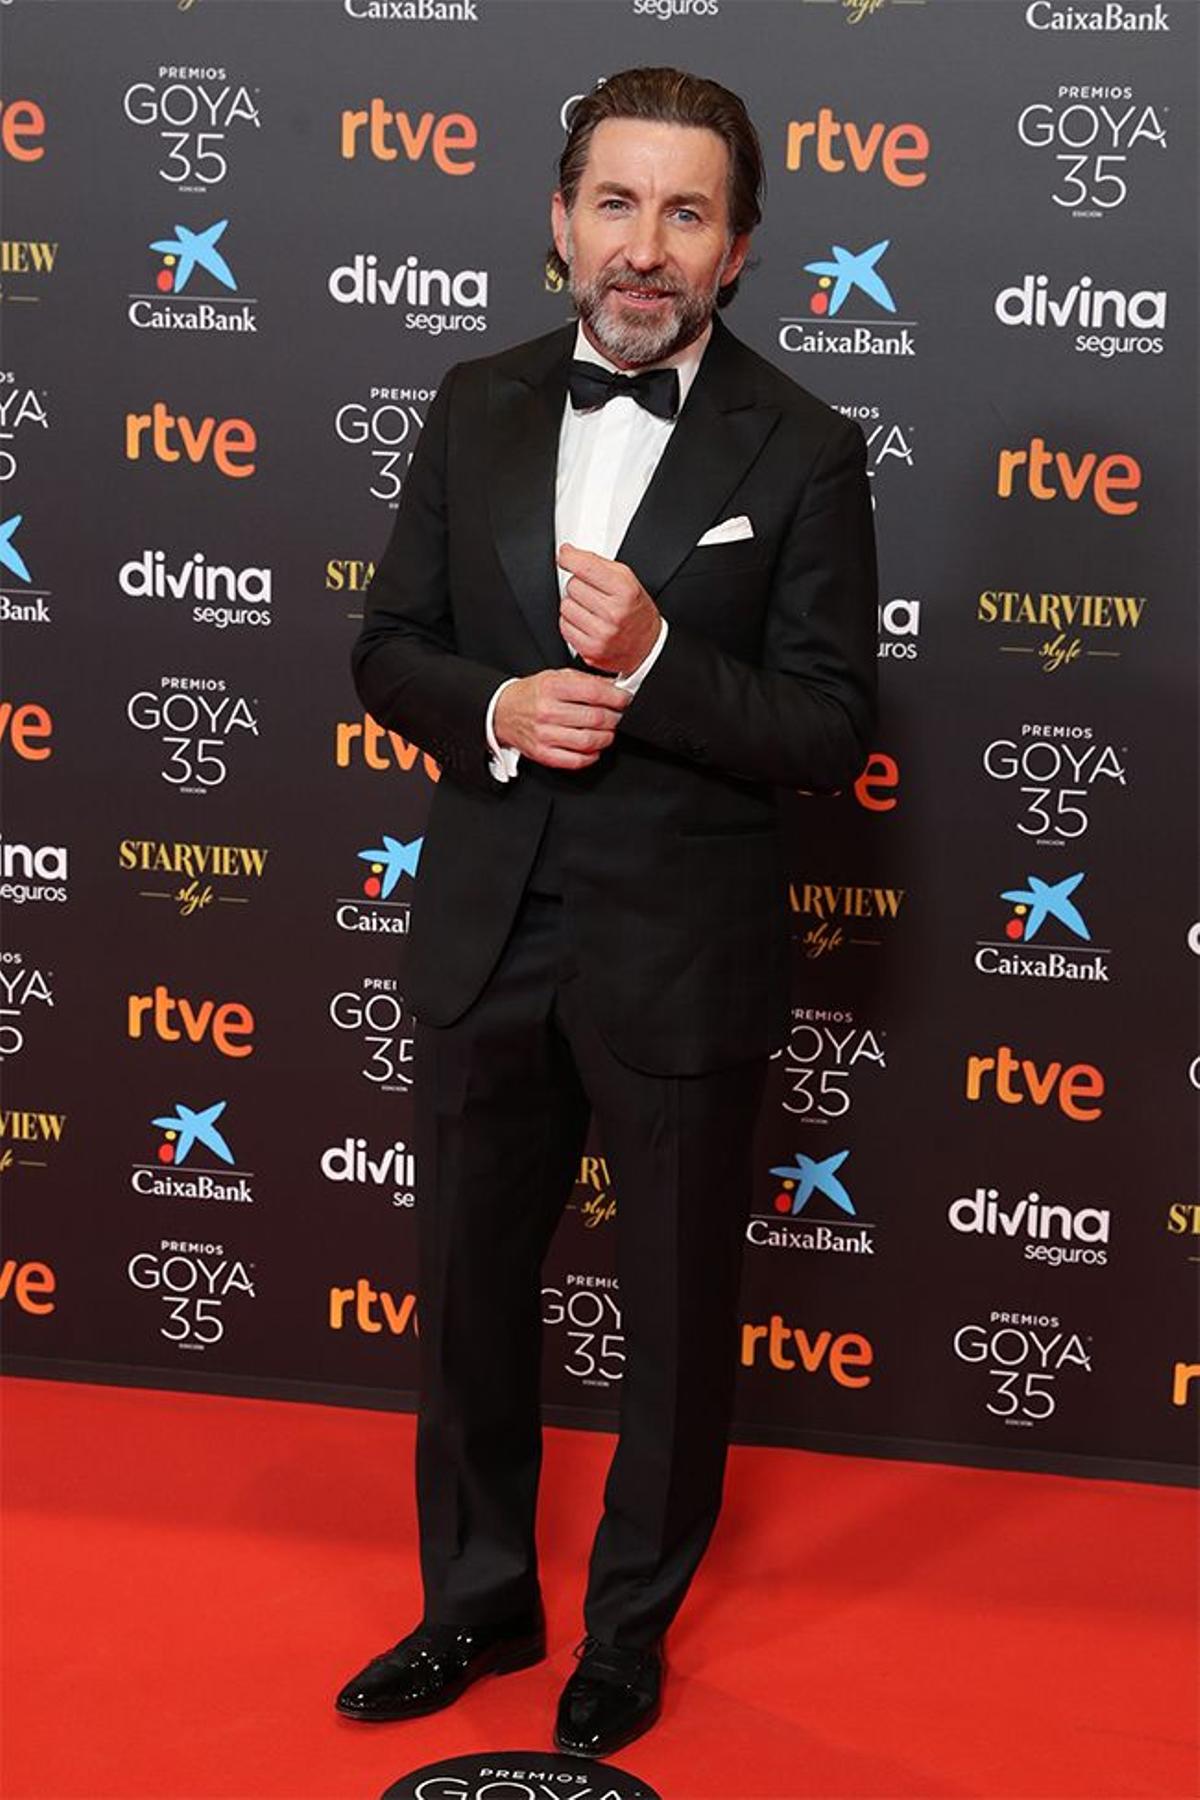 Antonio de la Torre, Premios Goya 2021